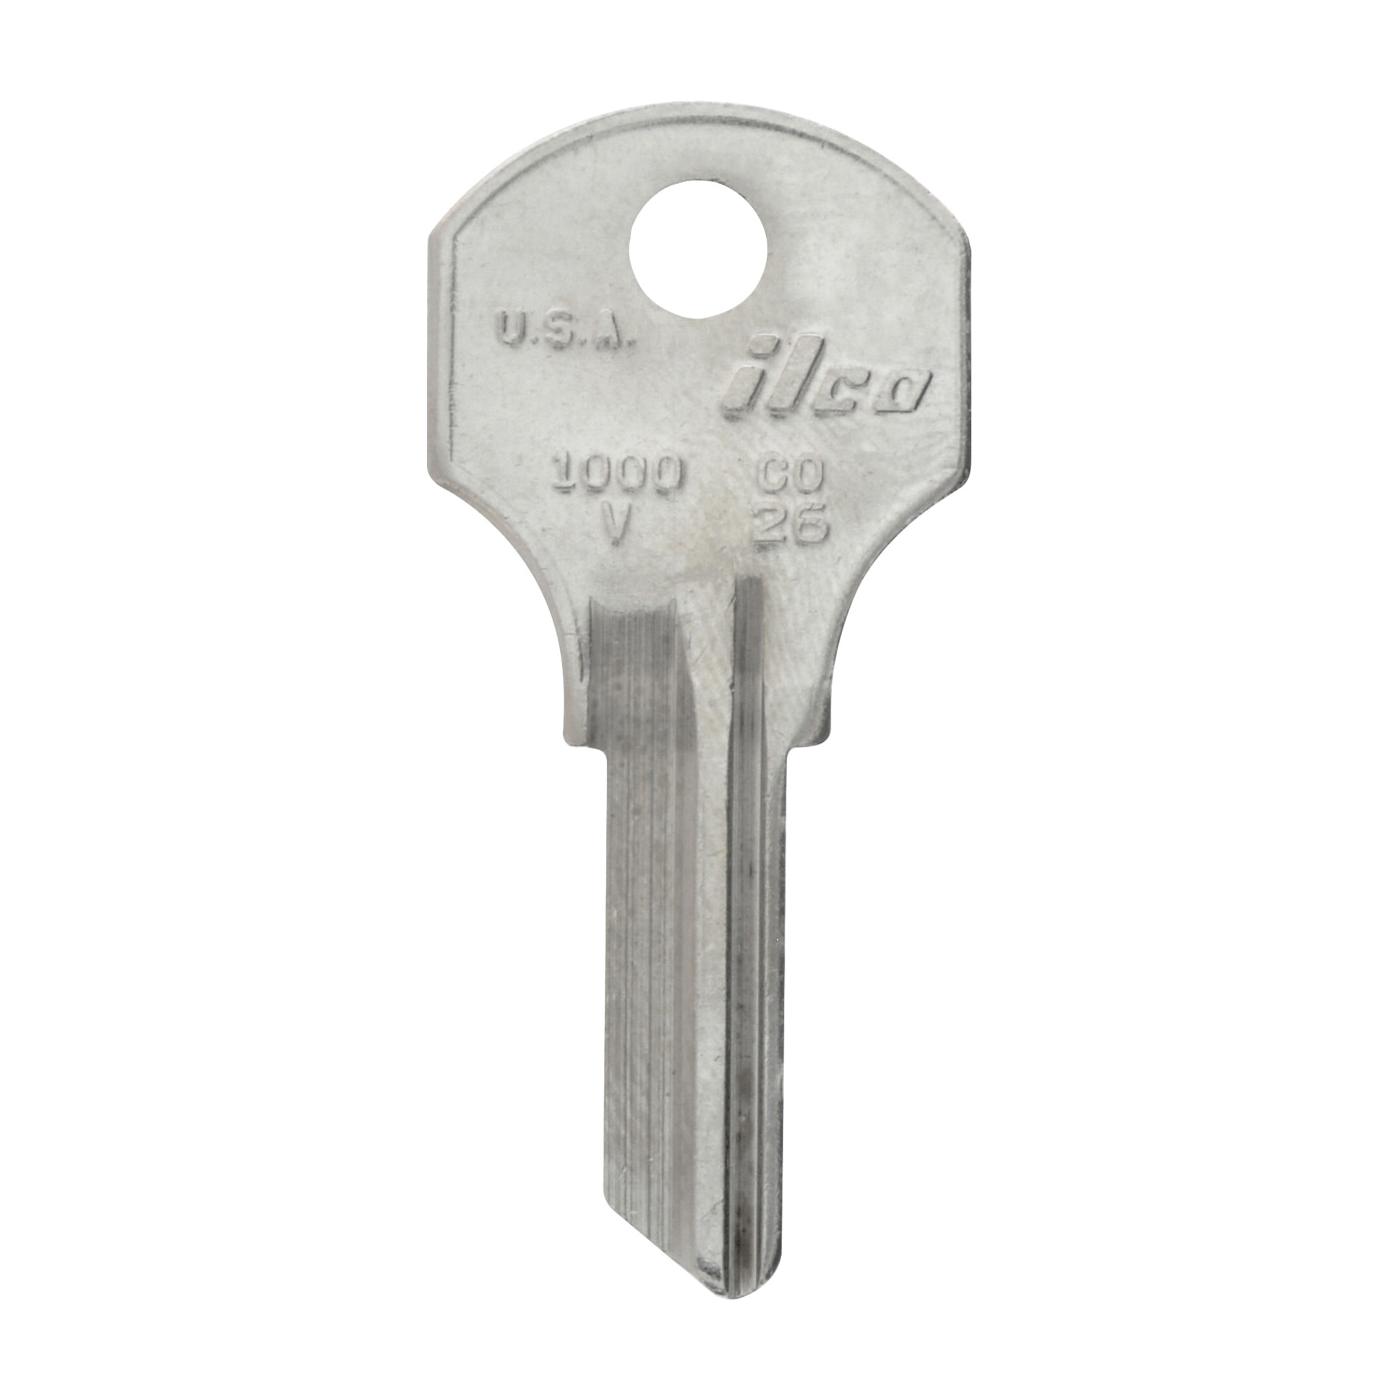 Hillman 441540 Key, For: Corbin Locks